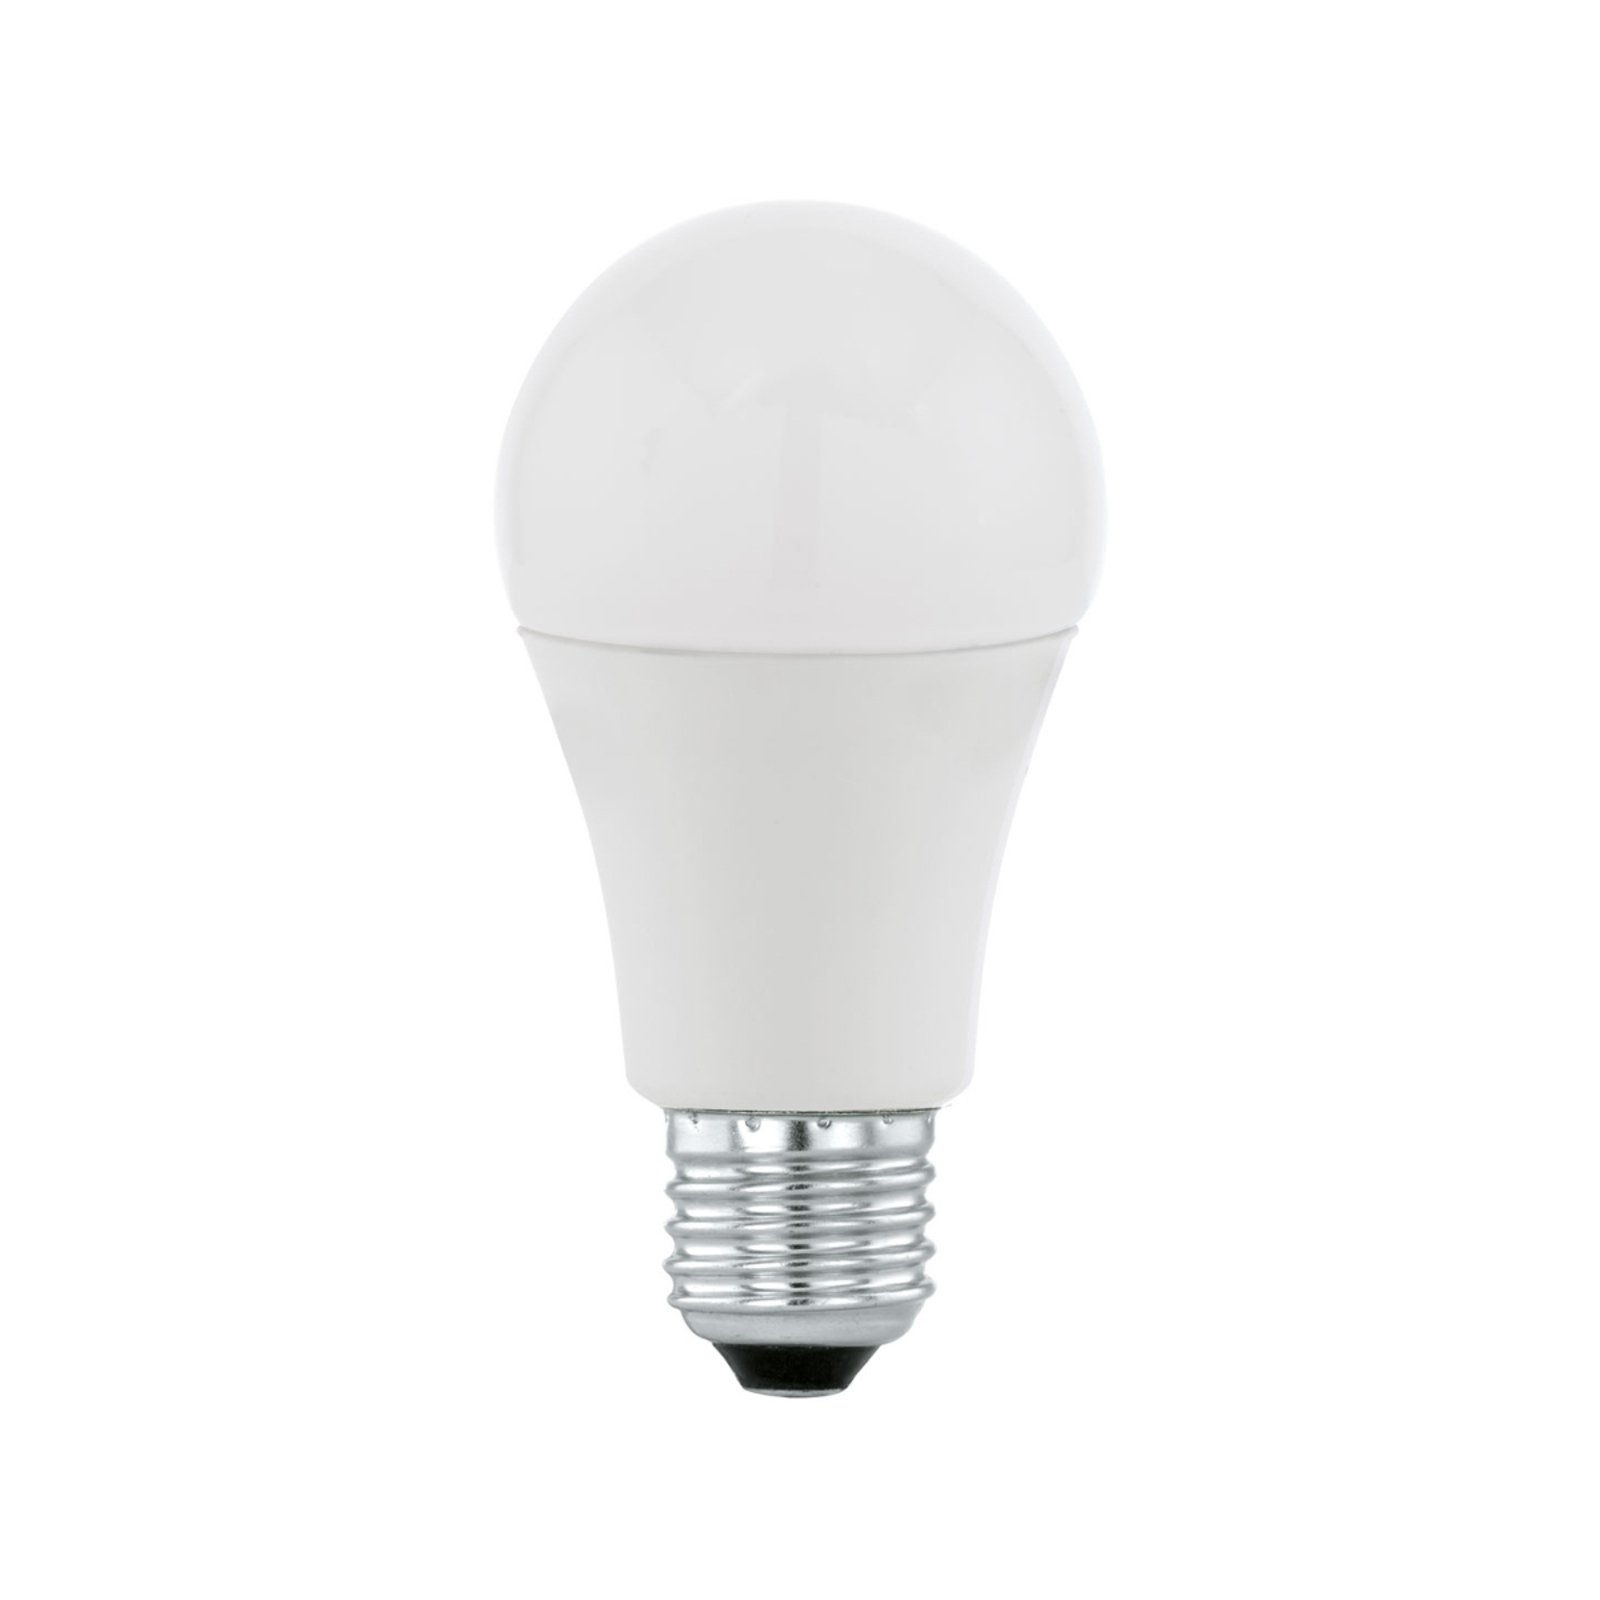 LED lempa E27 A60 9W, šiltai balta, opalinė